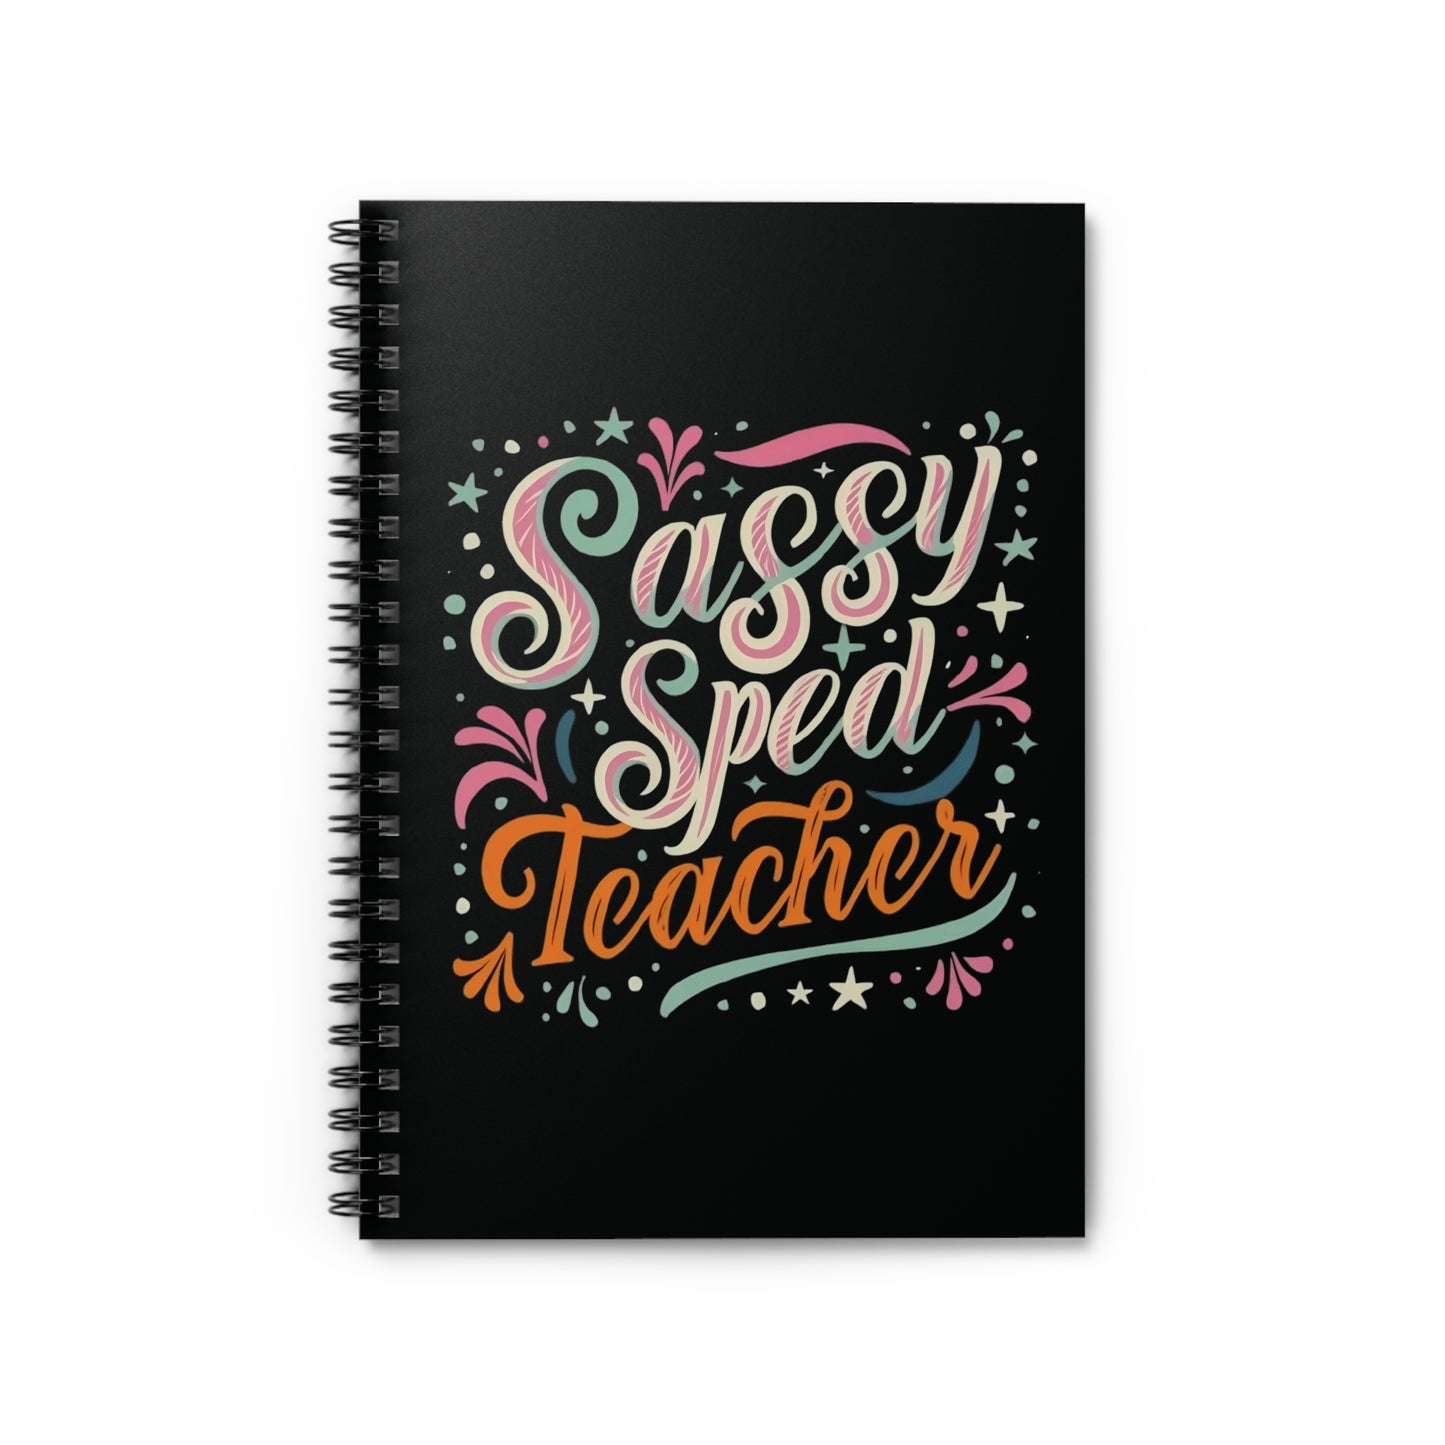 Special Ed Teacher Spiral Notebook - "Sassy Sped Teacher"